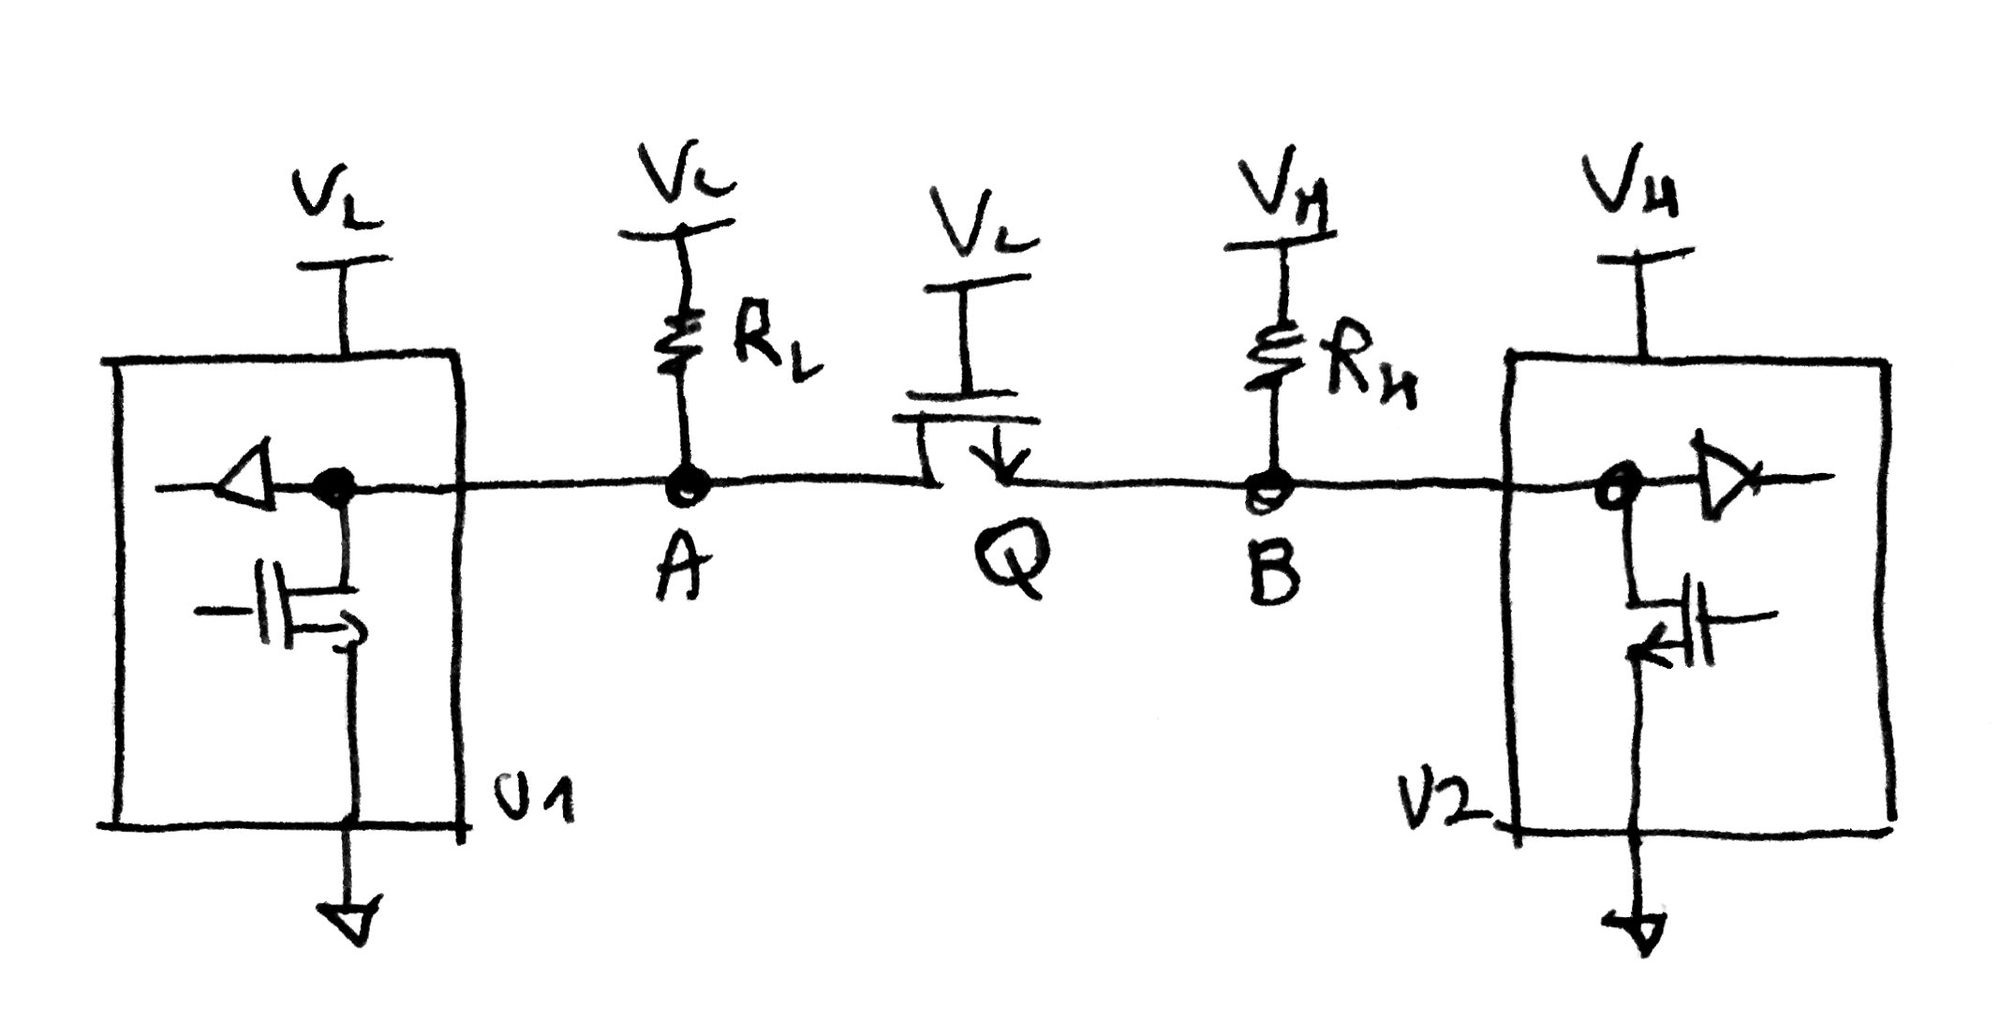 Single-Transistor Bidirectional Level Shifter